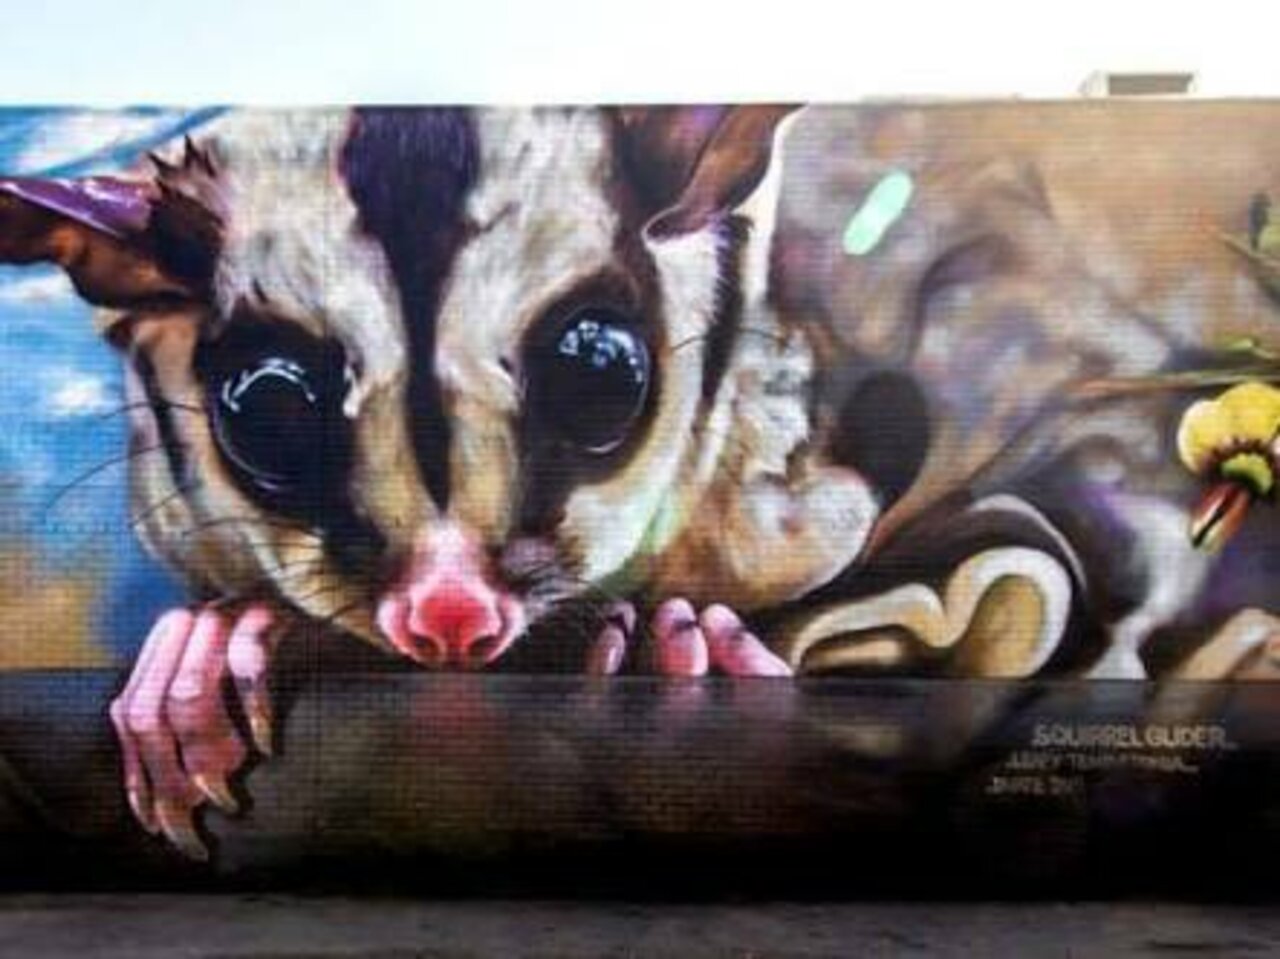 #mural by Dvate #Benalla #Australia #streetart #art #graffiti https://t.co/8vI8CAFkNI